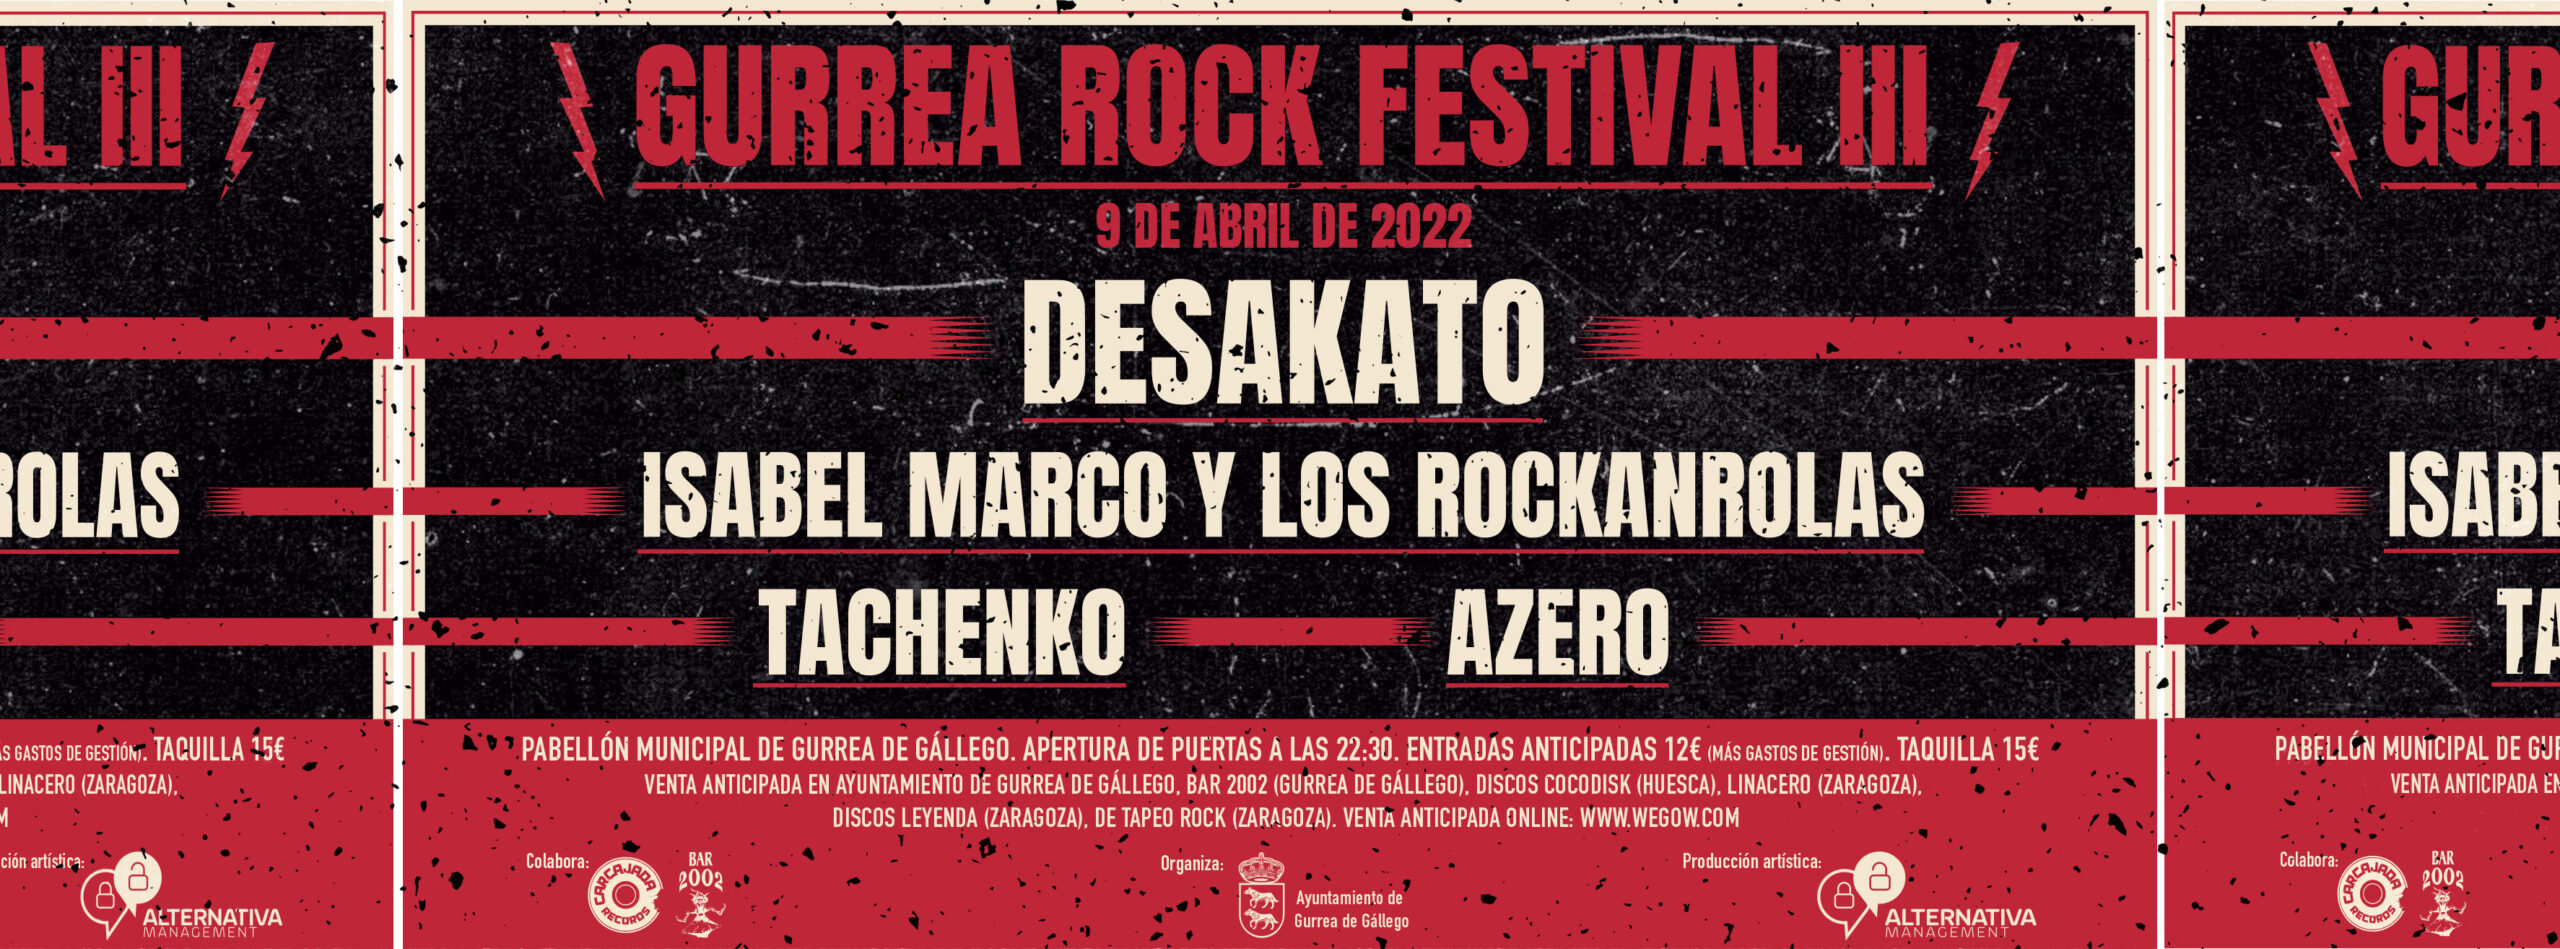 gurrea rock festival 2022 16373403110270634